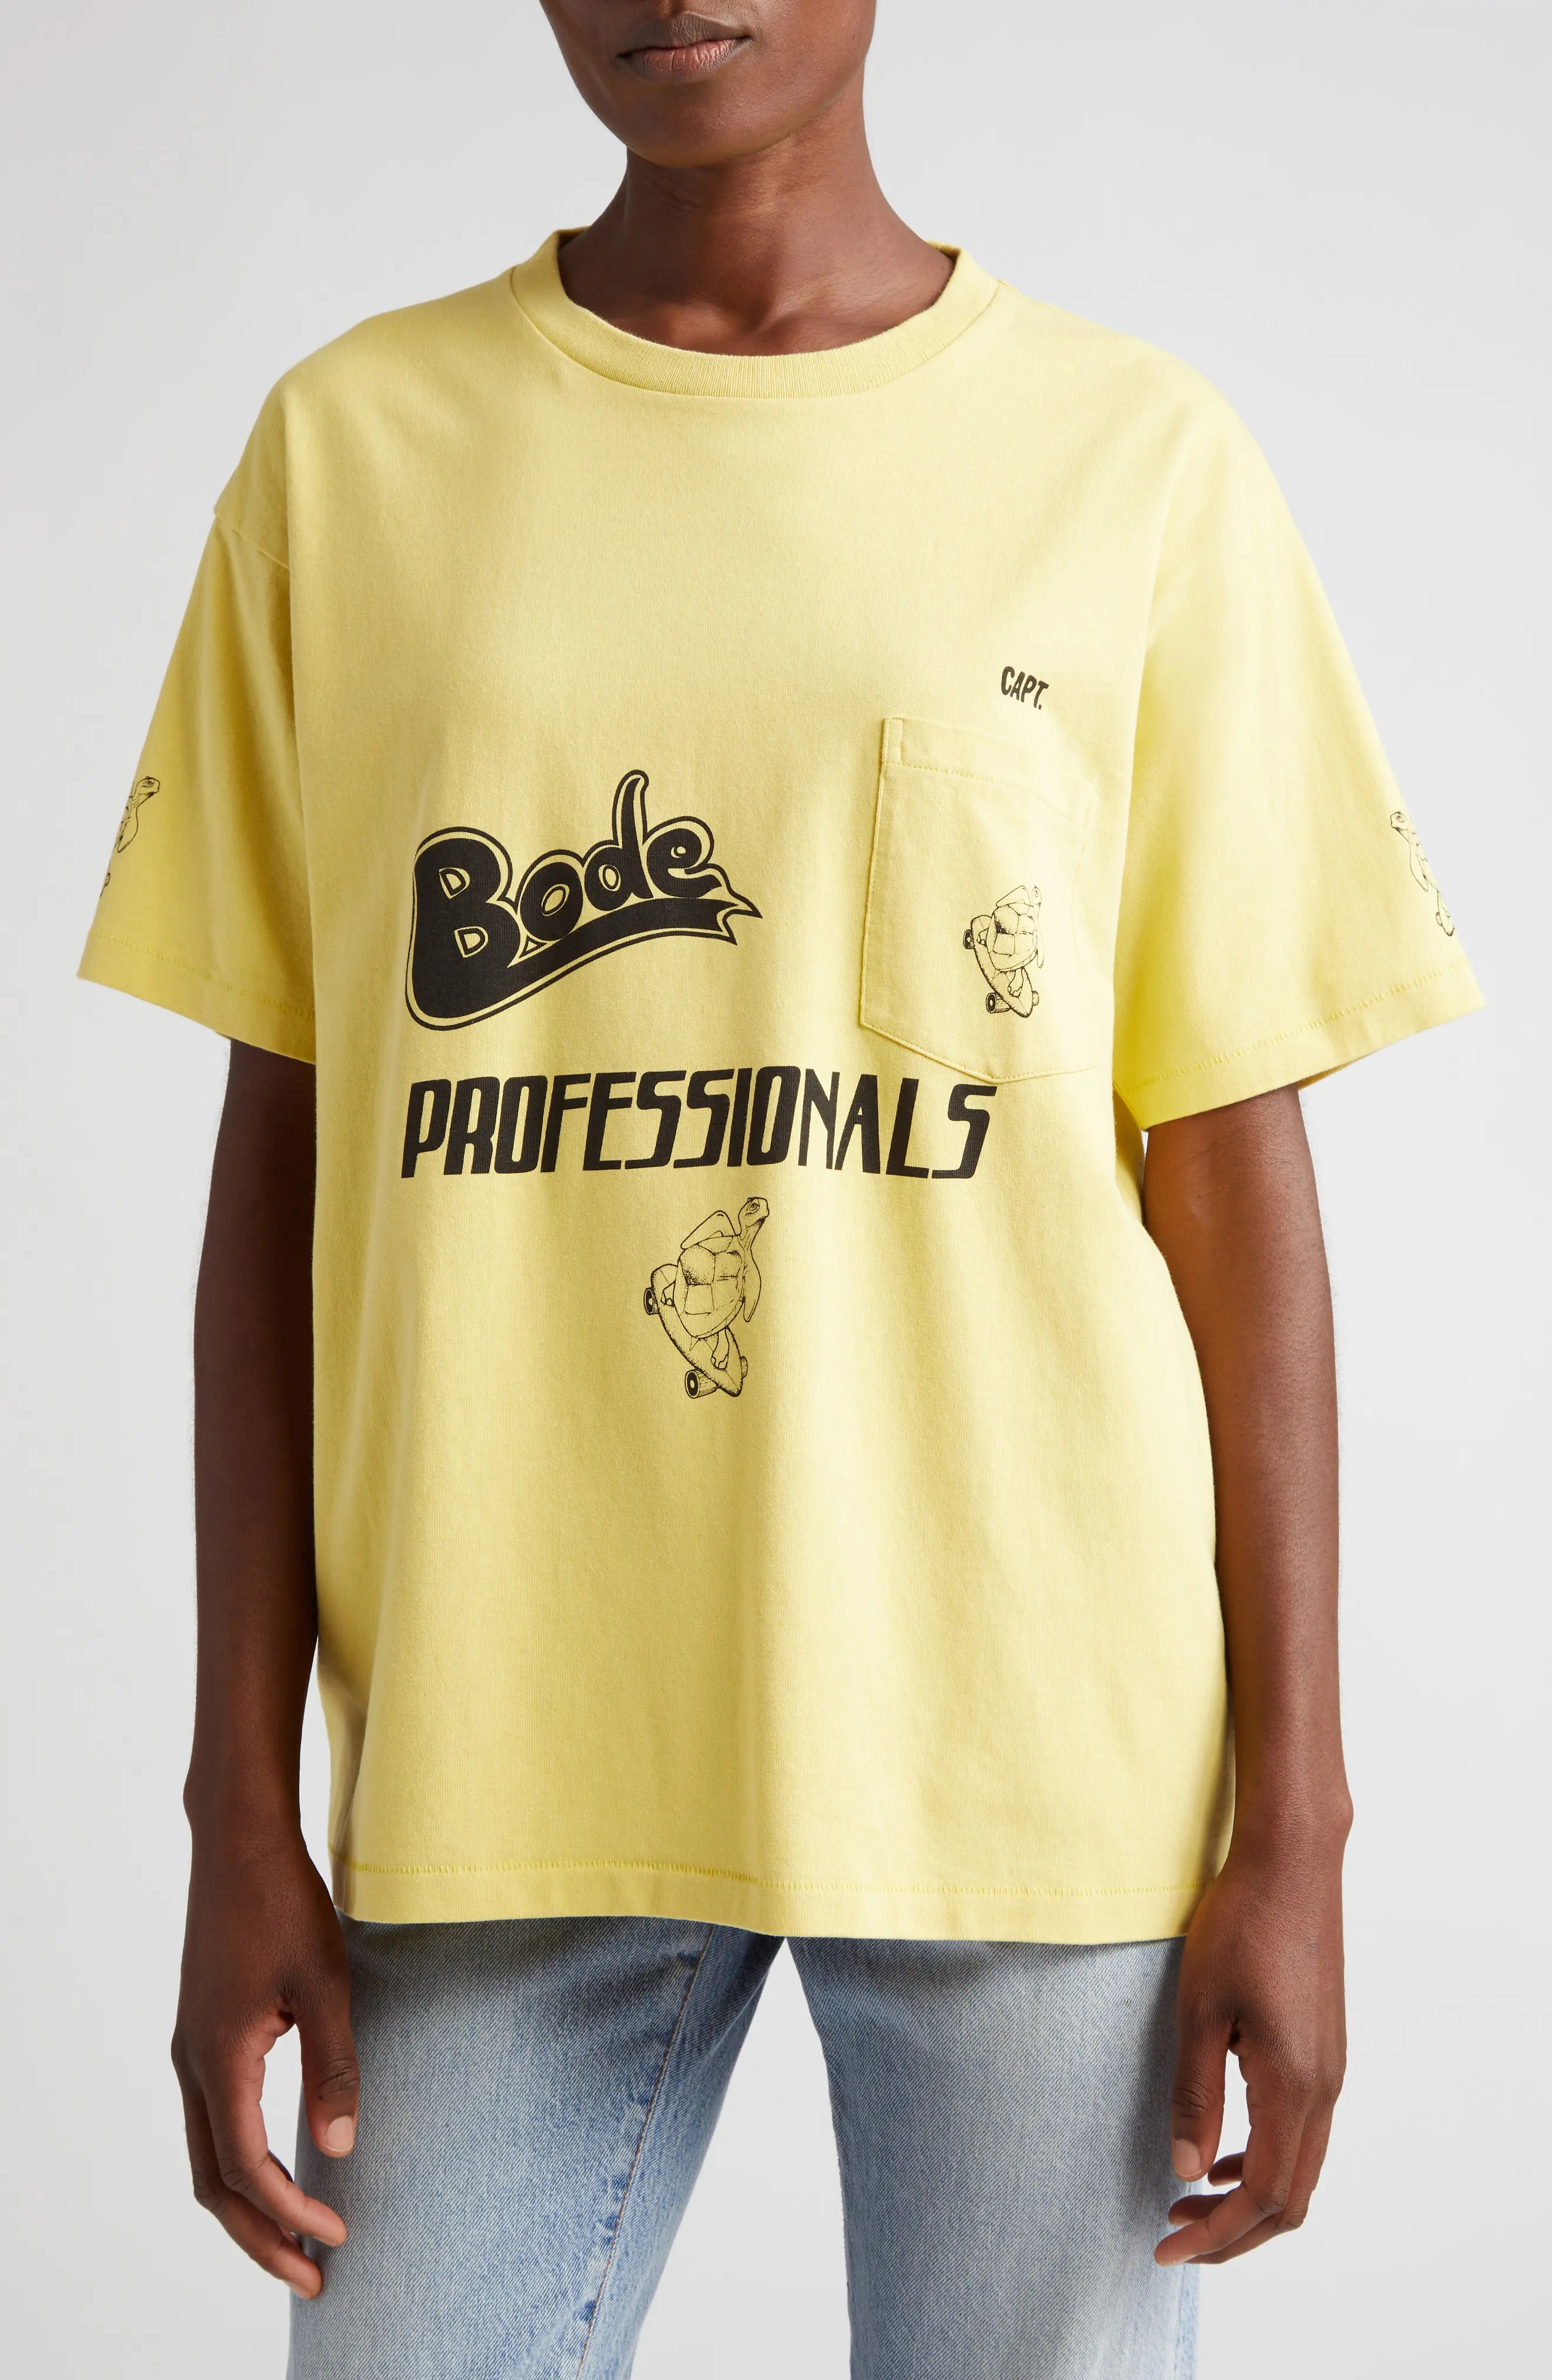 Professionals Graphic T-Shirt - 1